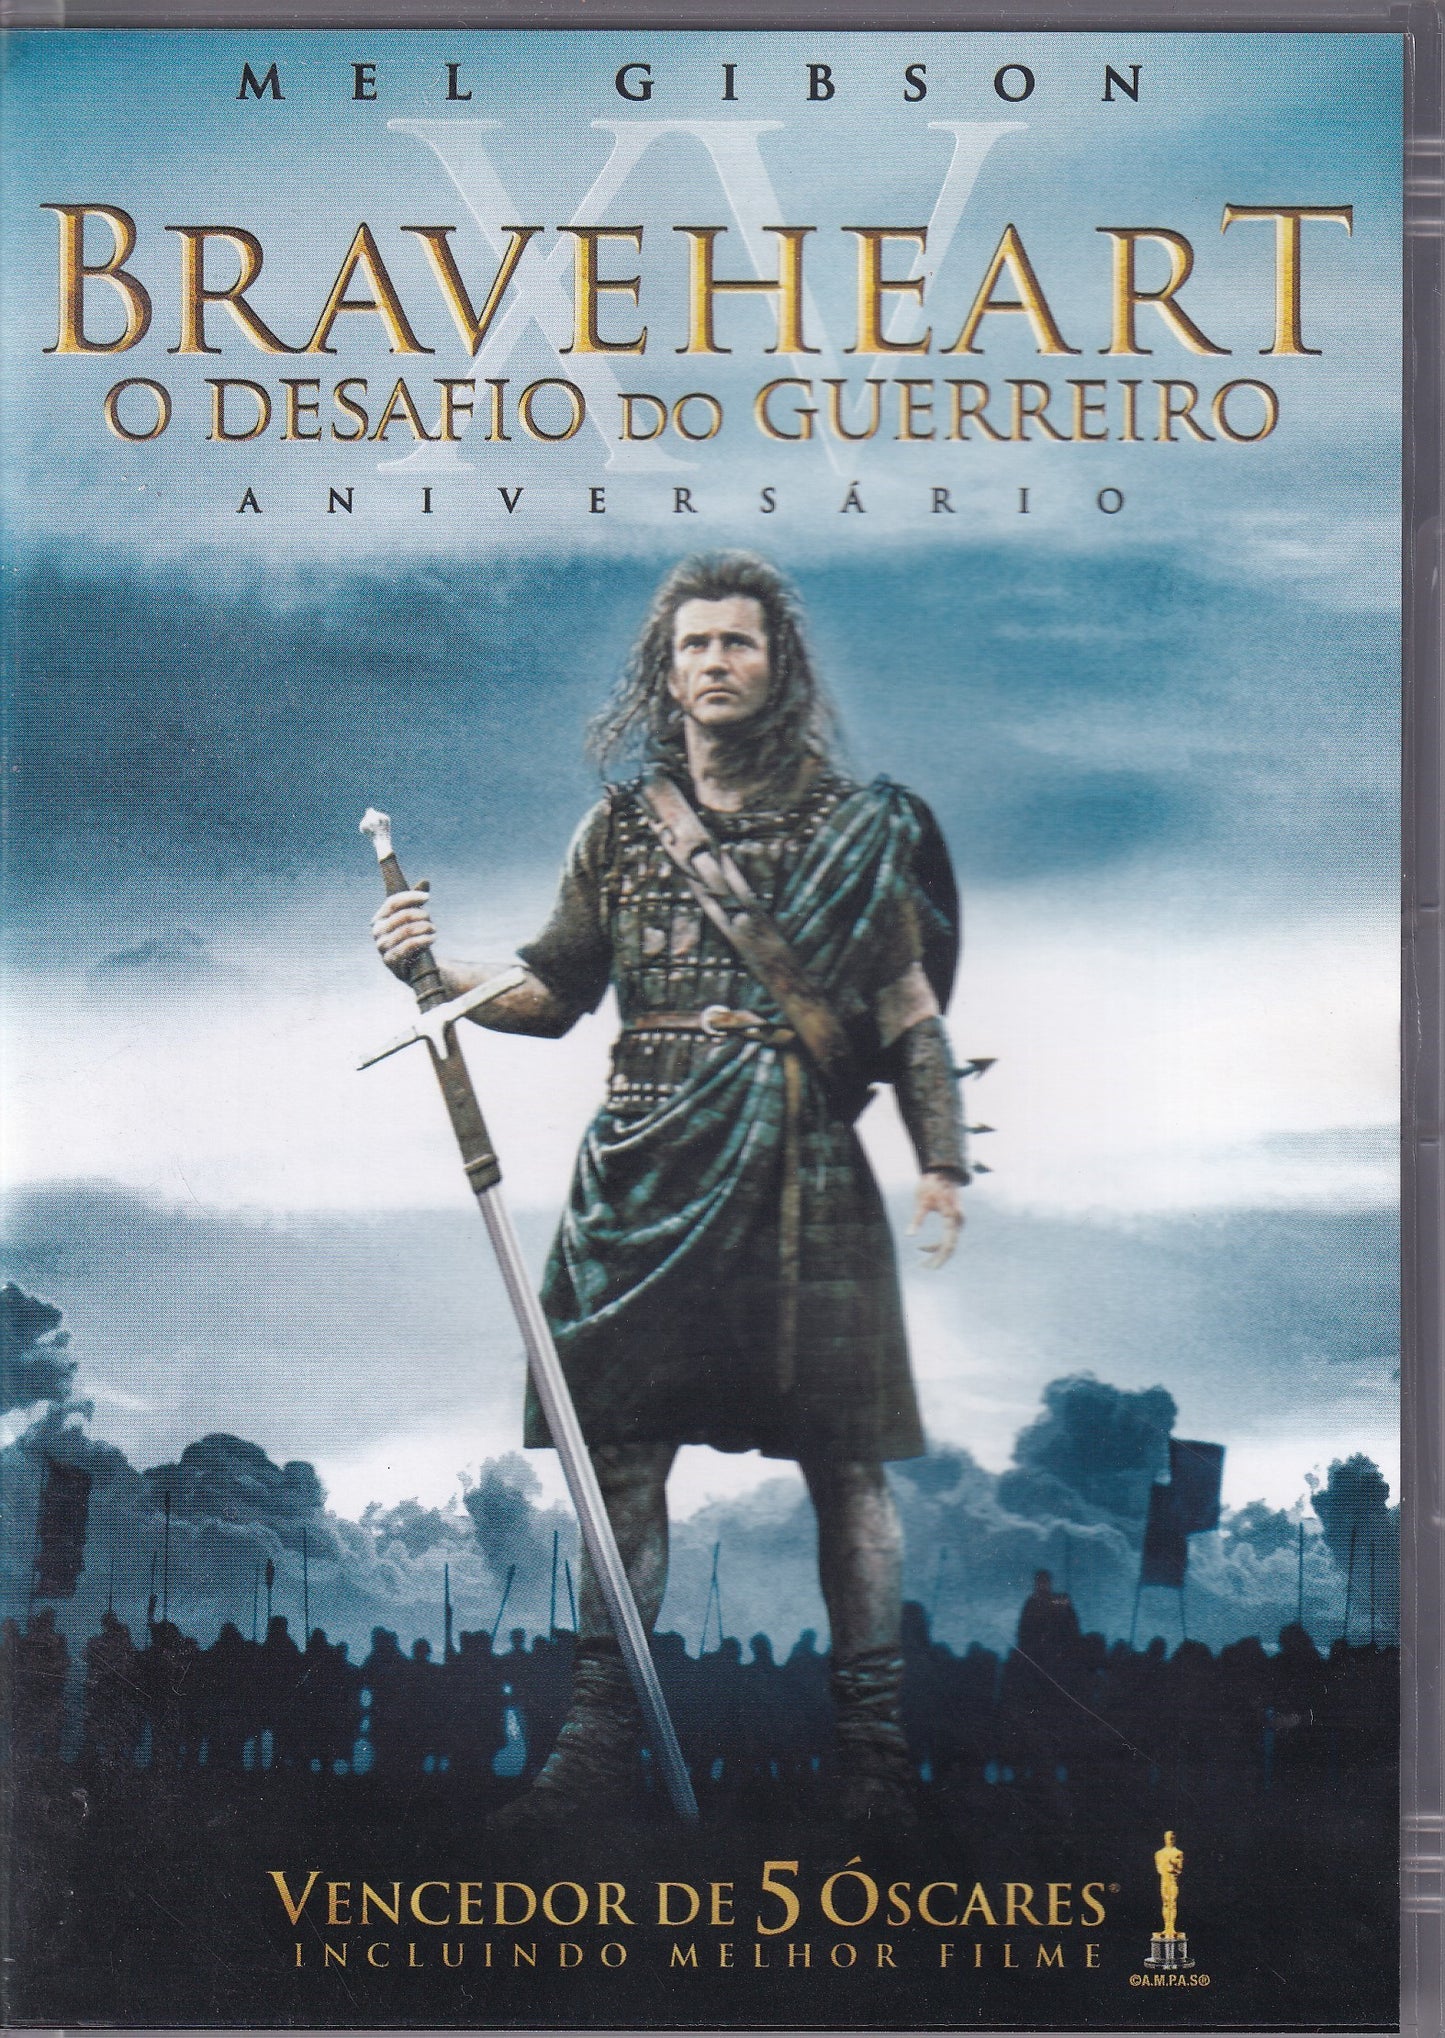 DVD - BRAVEHEART O DESAFIO DO GUERREIRO (ANIVERSÁRIO) - USADO